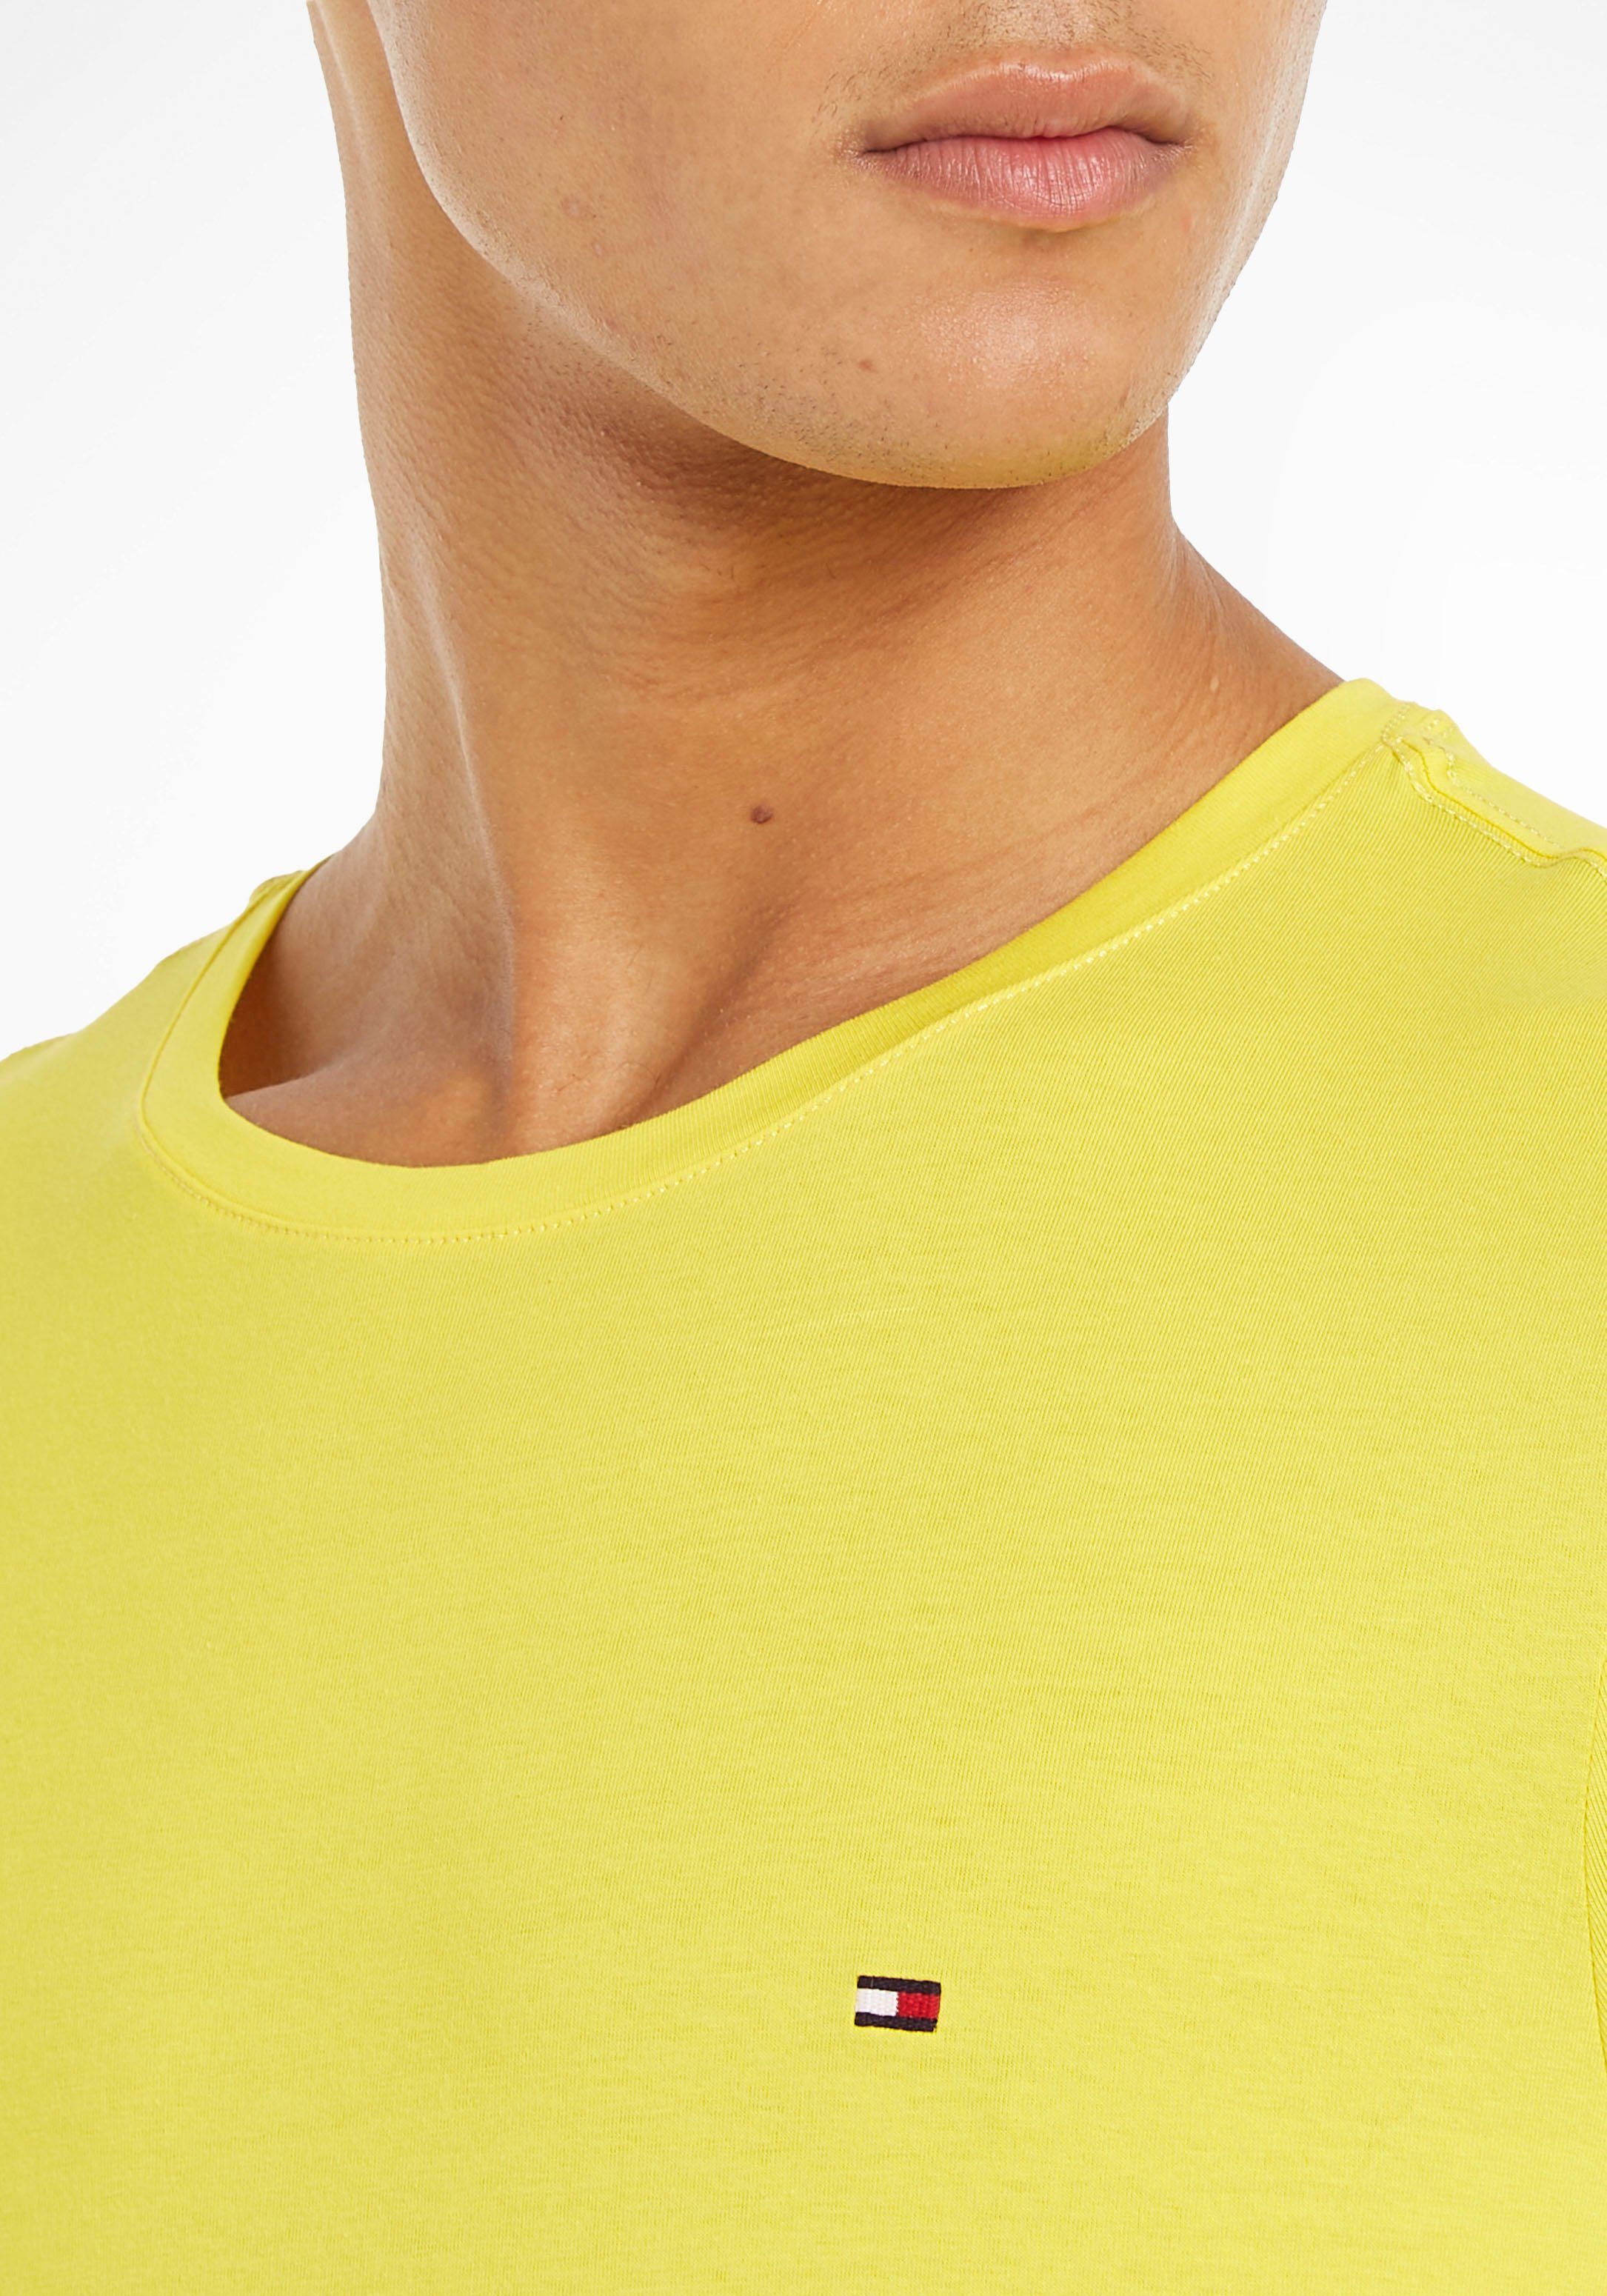 SLIM Yellow Tommy STRETCH Hilfiger TEE FIT Vivid T-Shirt